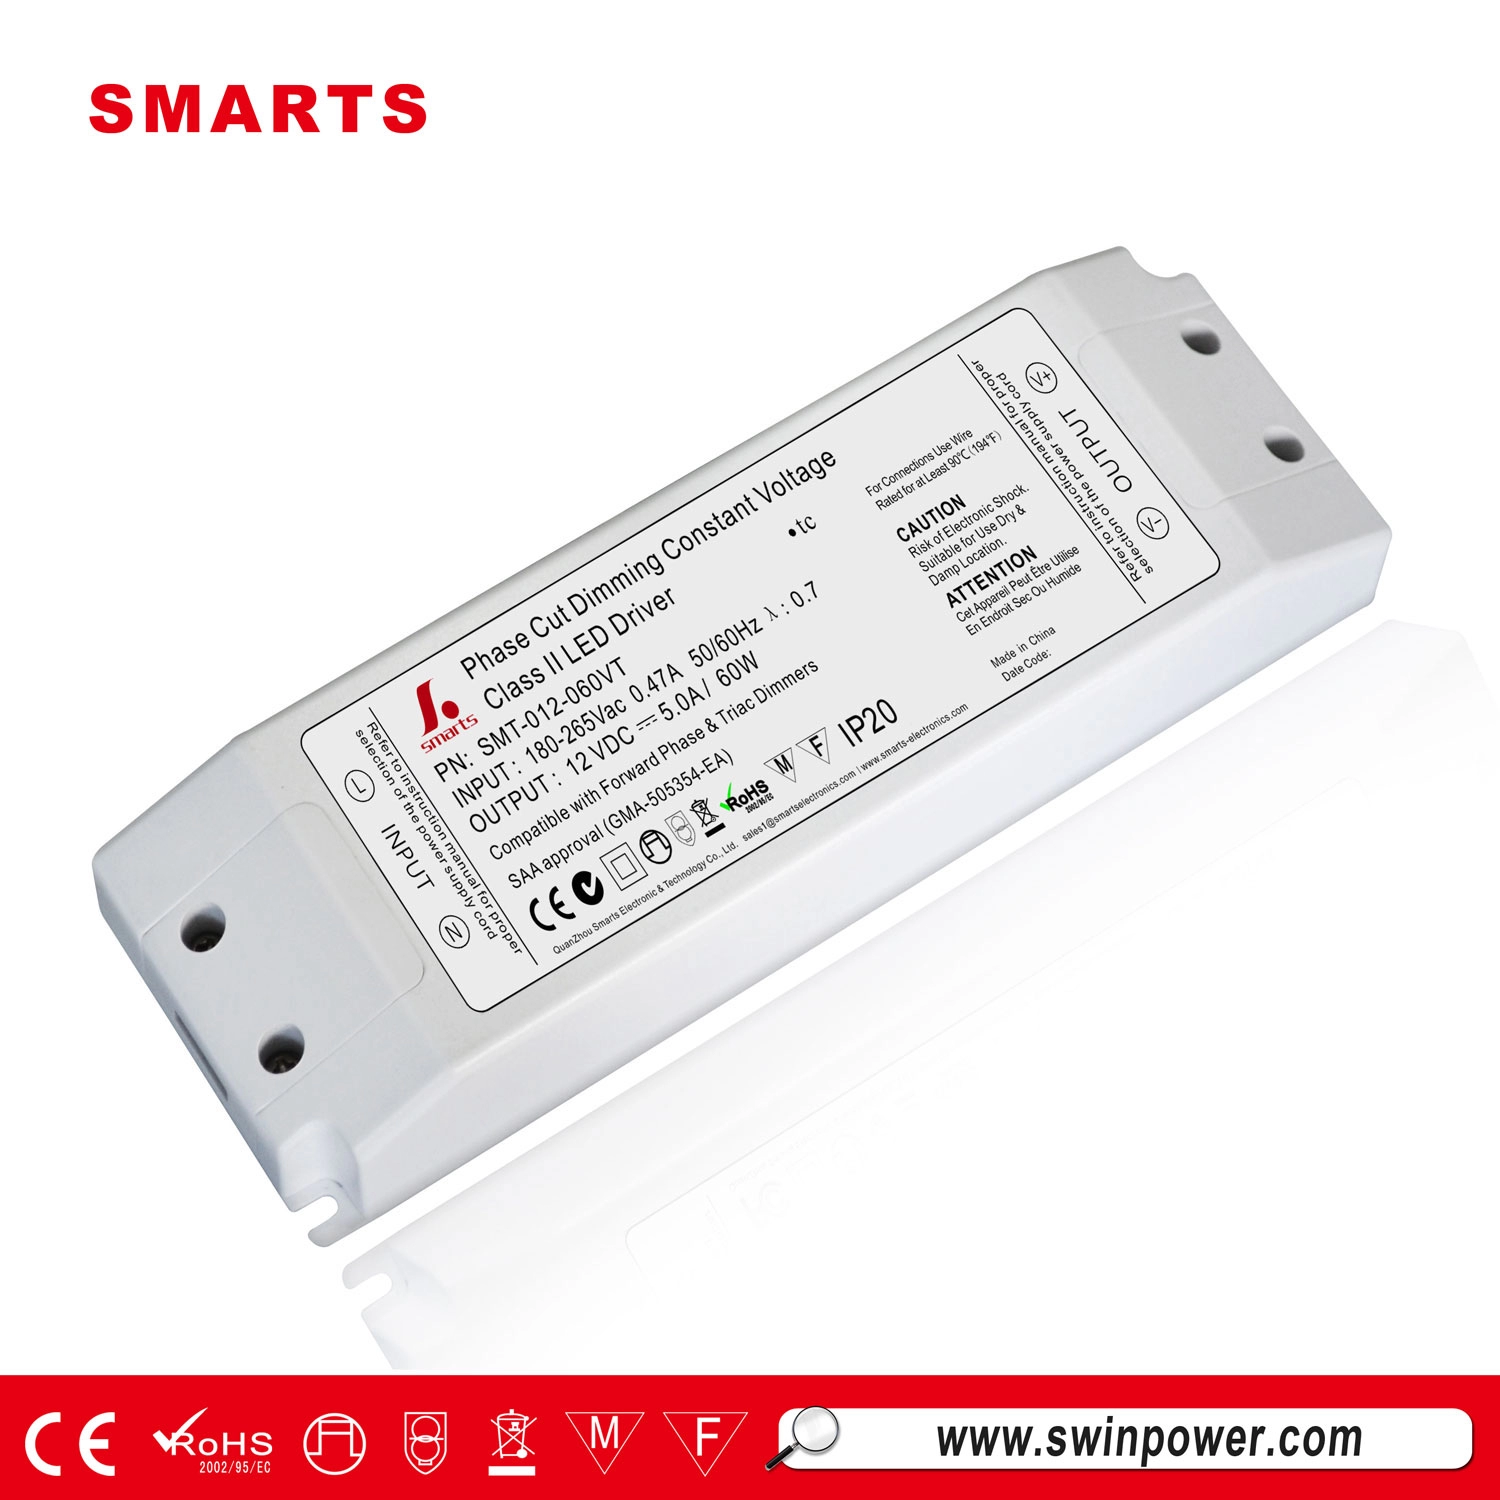 Controlador led triac regulable 60w 12v dc fuente de alimentación 5 amp para luces led